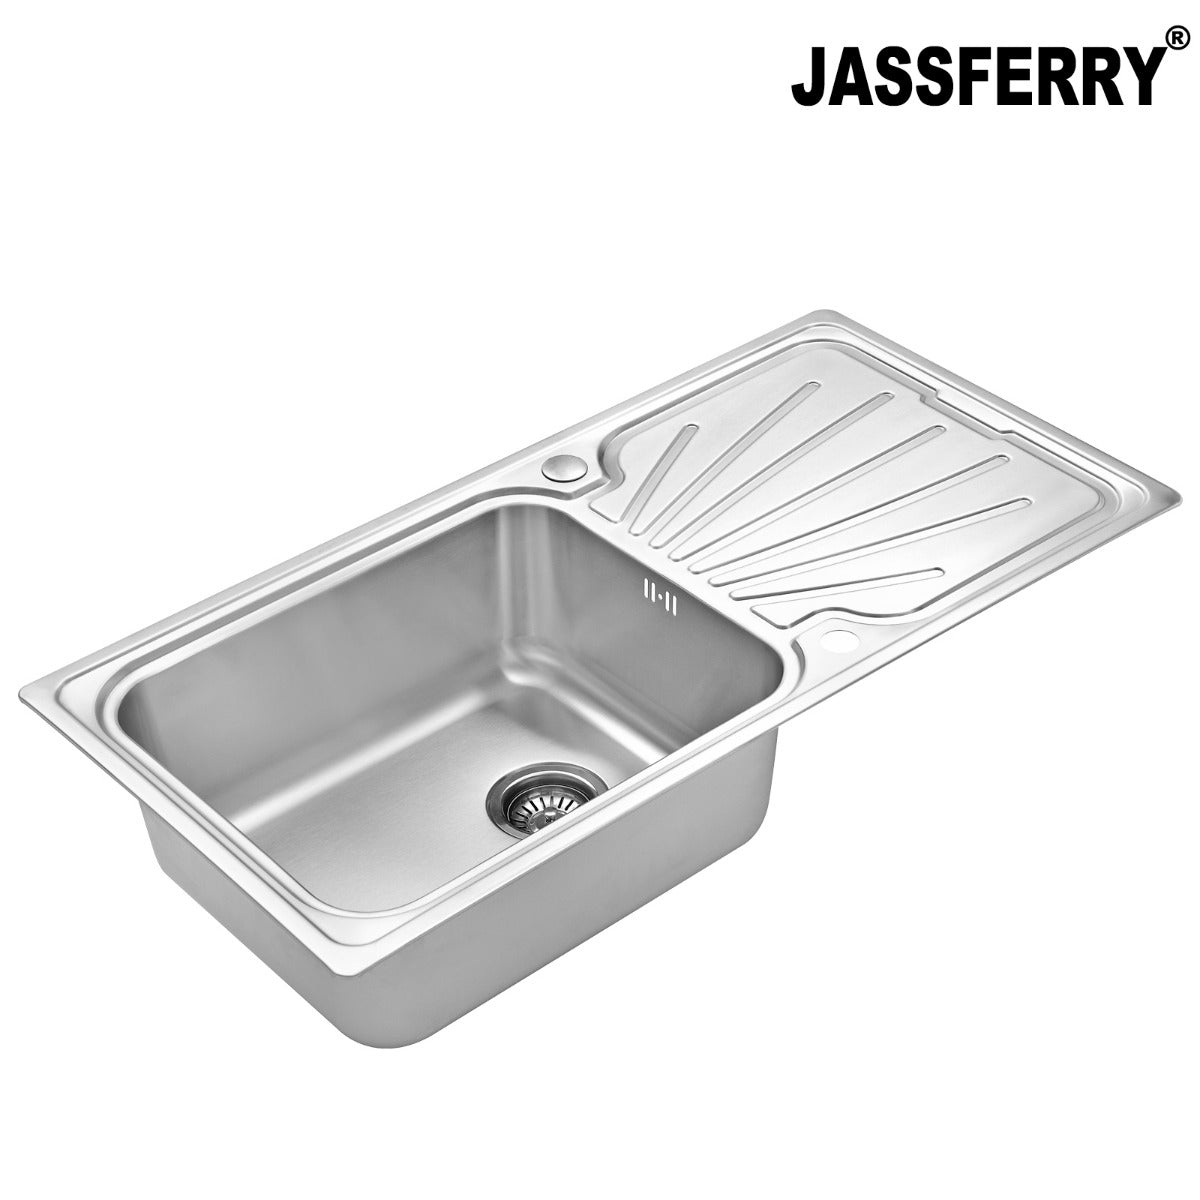 JassferryJASSFERRY Stainless Steel Kitchen Sink Single Large Bowl Reversible Drainer InsetKitchen Sinks